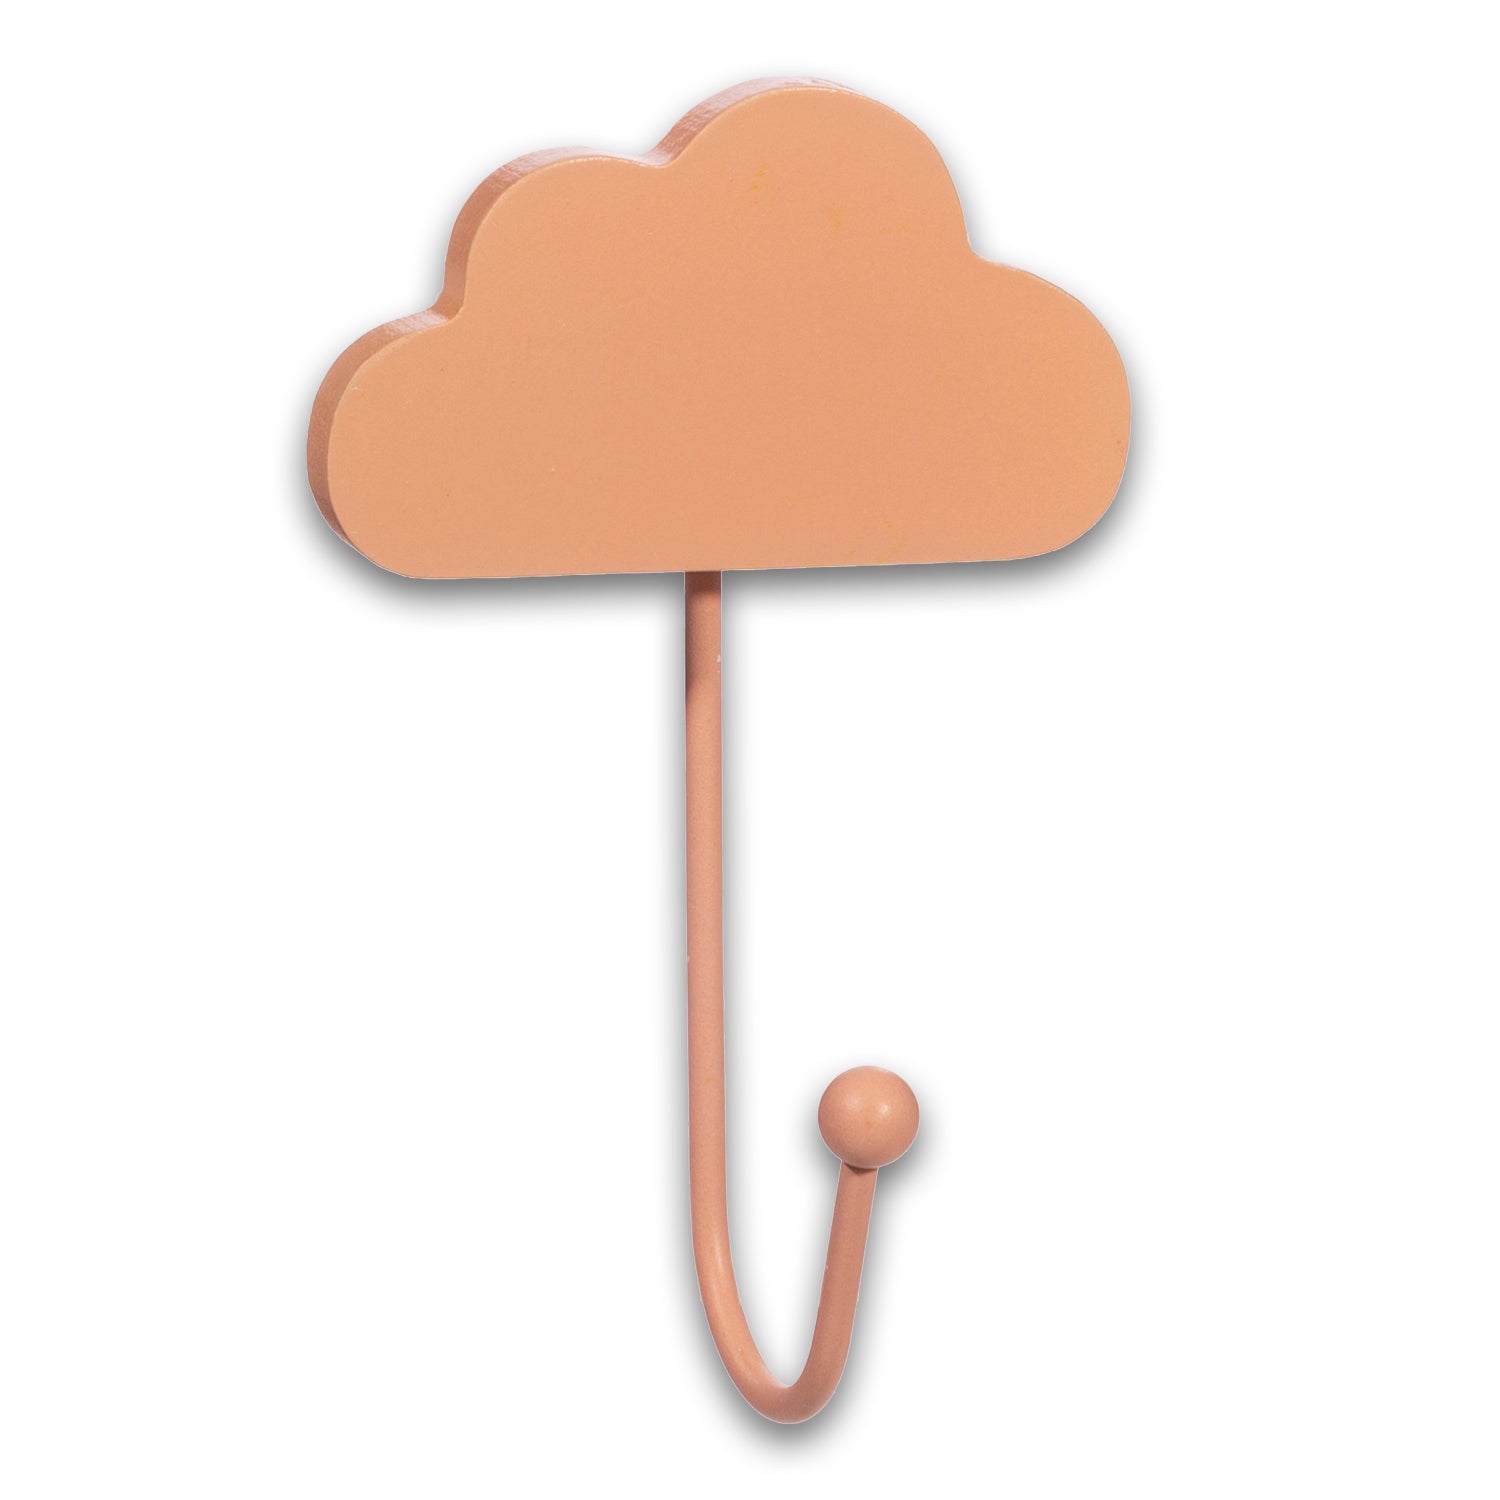 Sass &amp; Belle Cloud Hook - Single Hook Buy 2 For A Pair